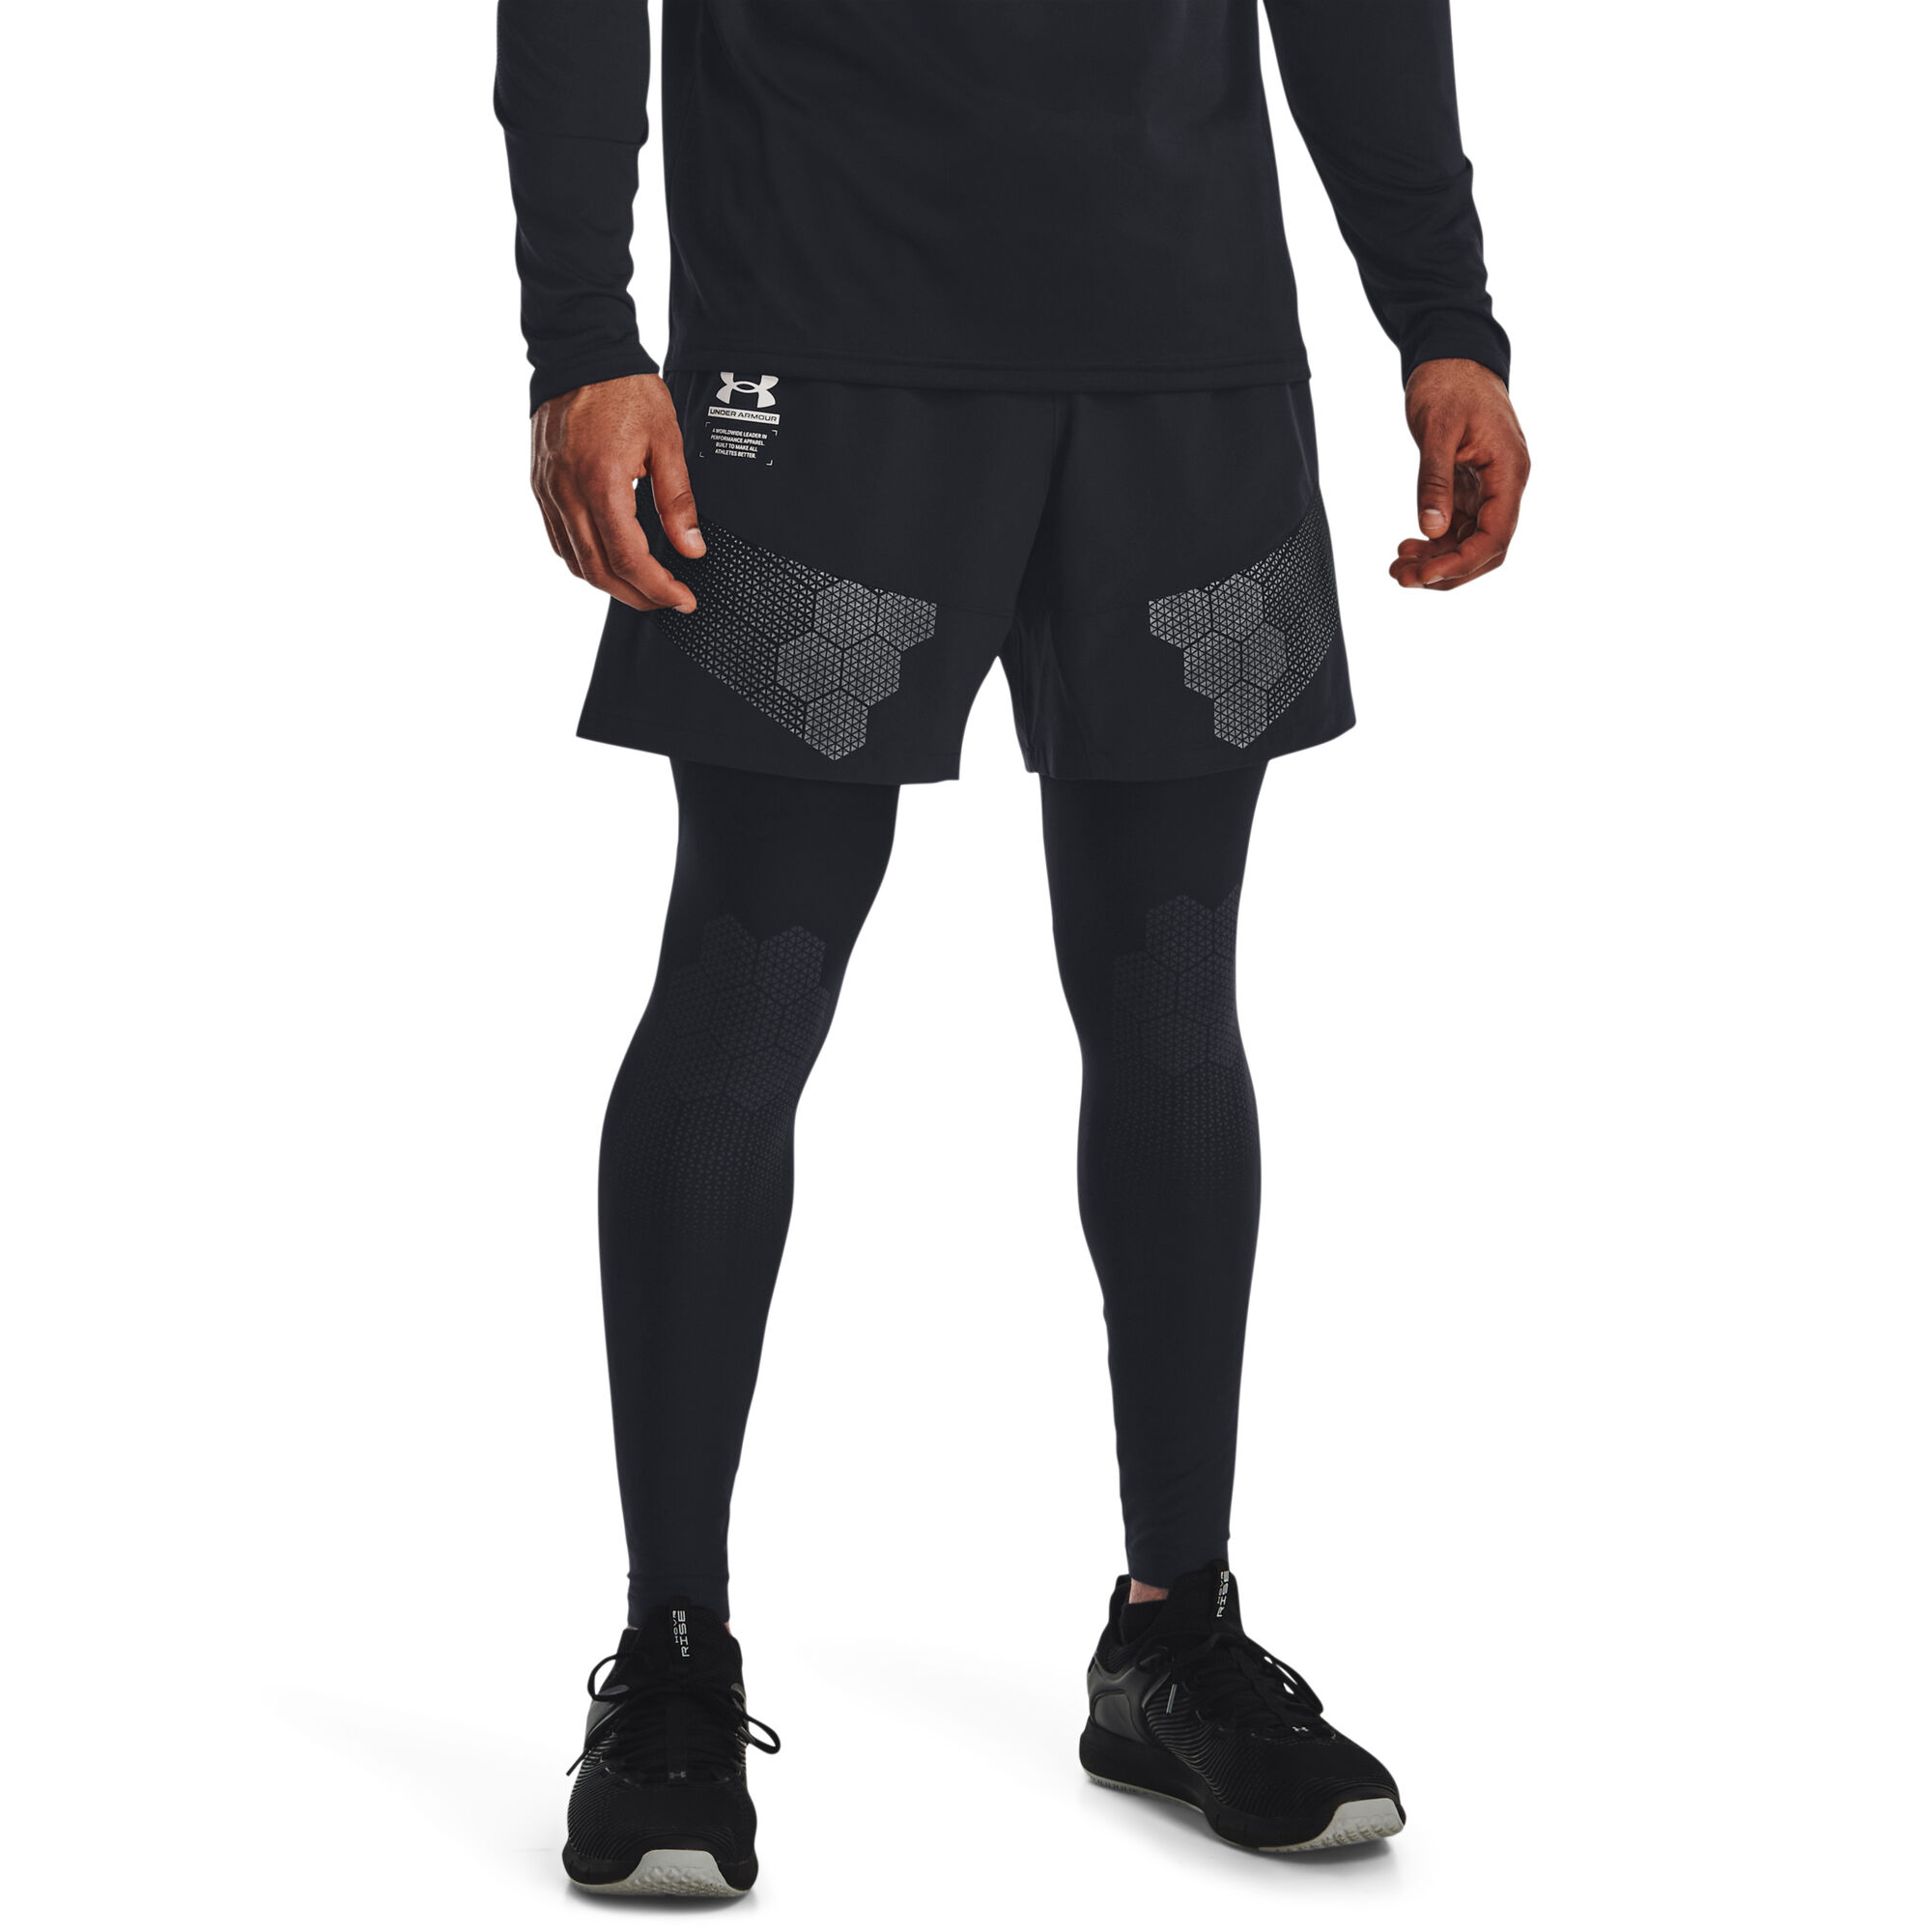 Buy Under Armour Armourprint Woven Shorts Men Black, Silver online